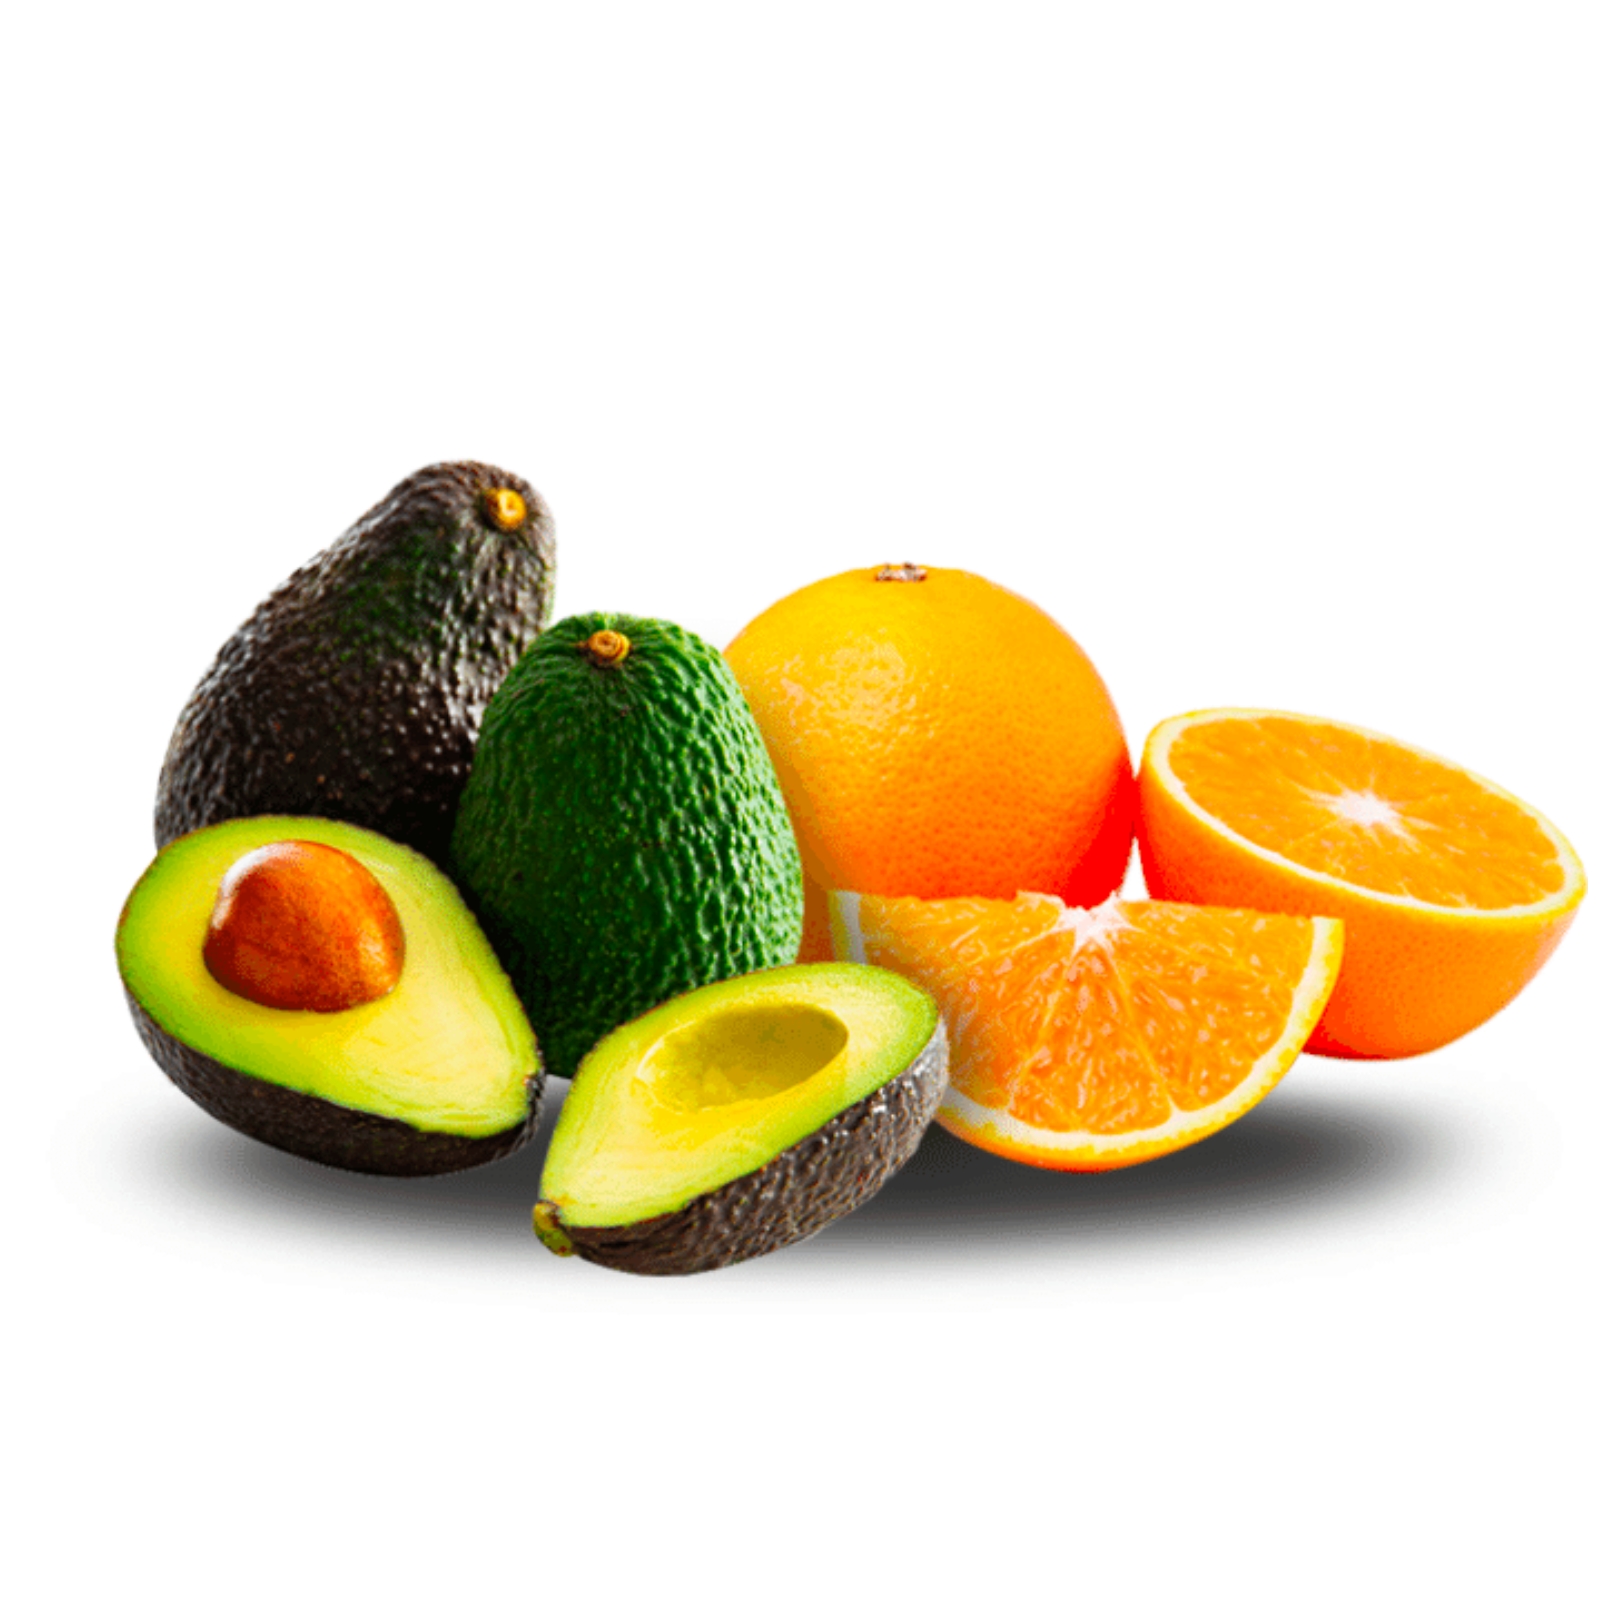 Buy Orange Avocado Online NZ